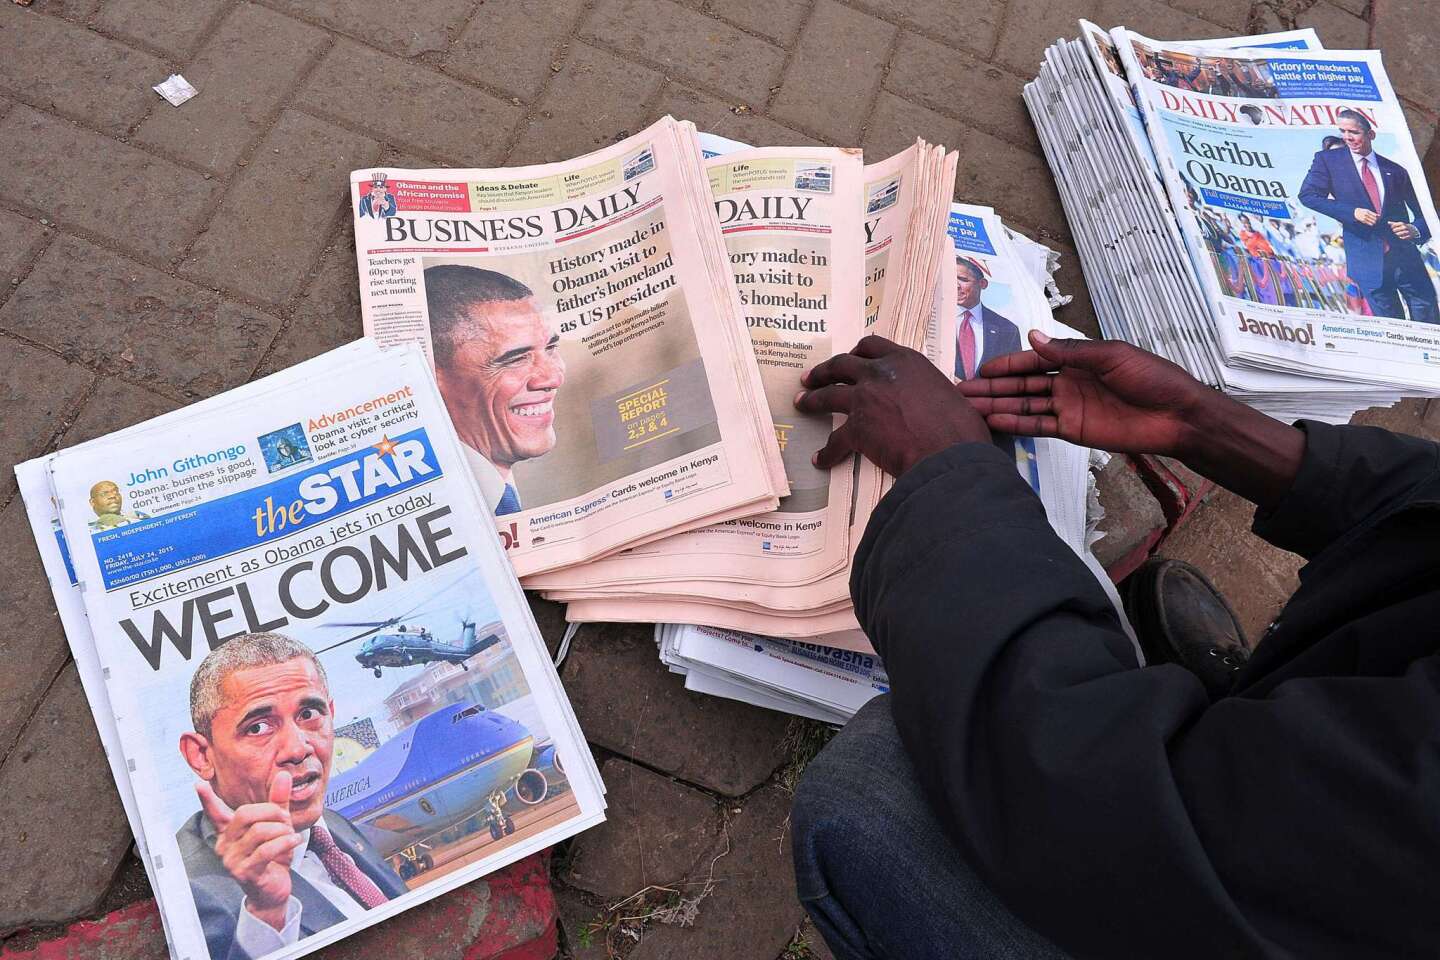 Obama mania in Kenya